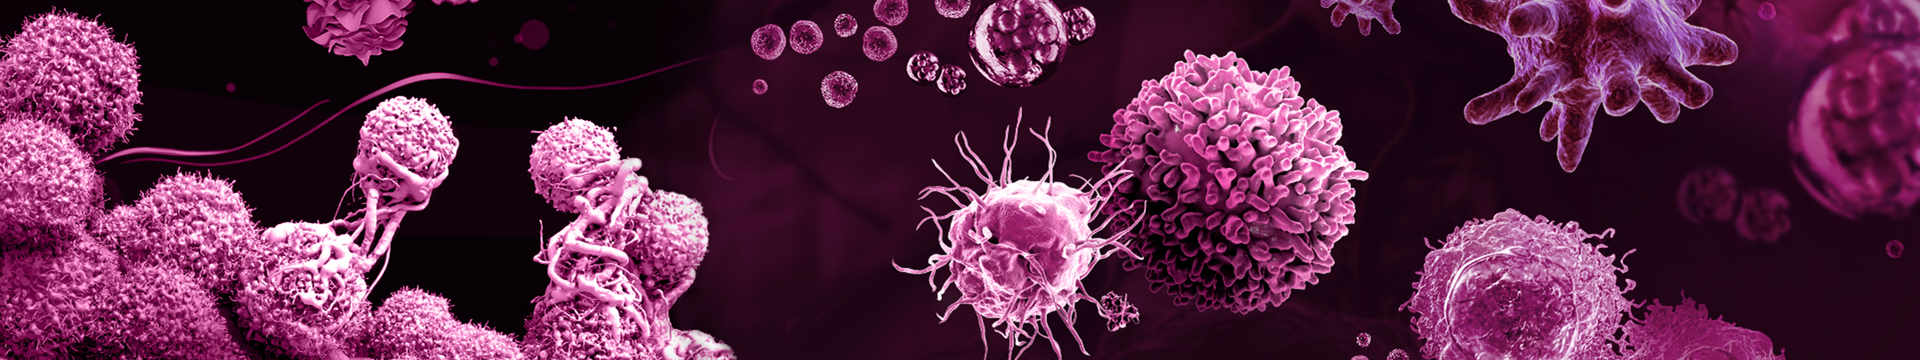 T Cell Killing Assays